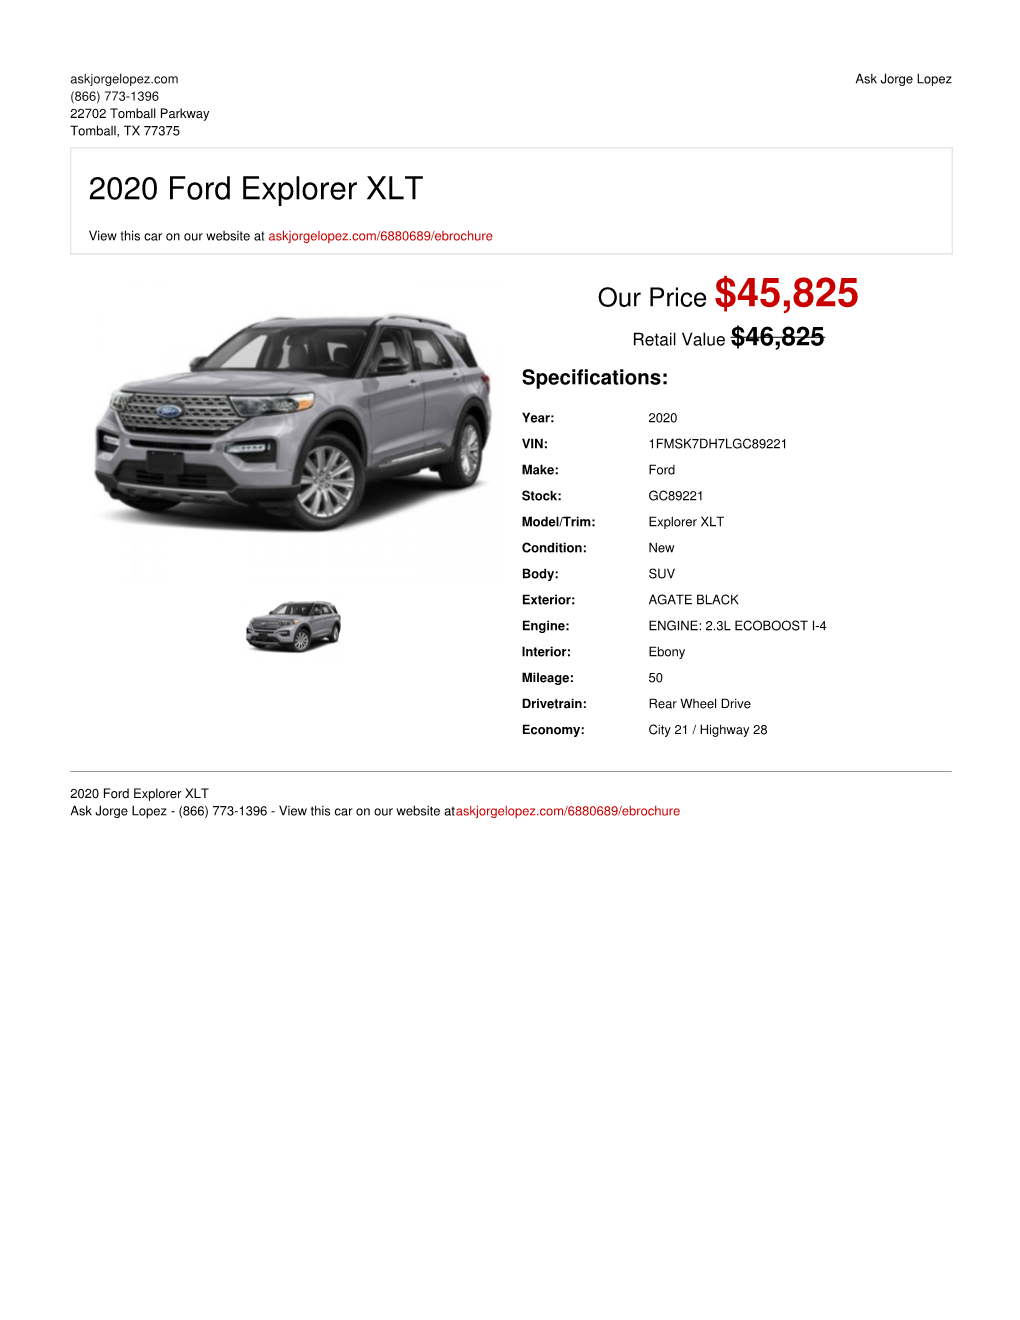 2020 Ford Explorer XLT | Tomball, TX | Ask Jorge Lopez